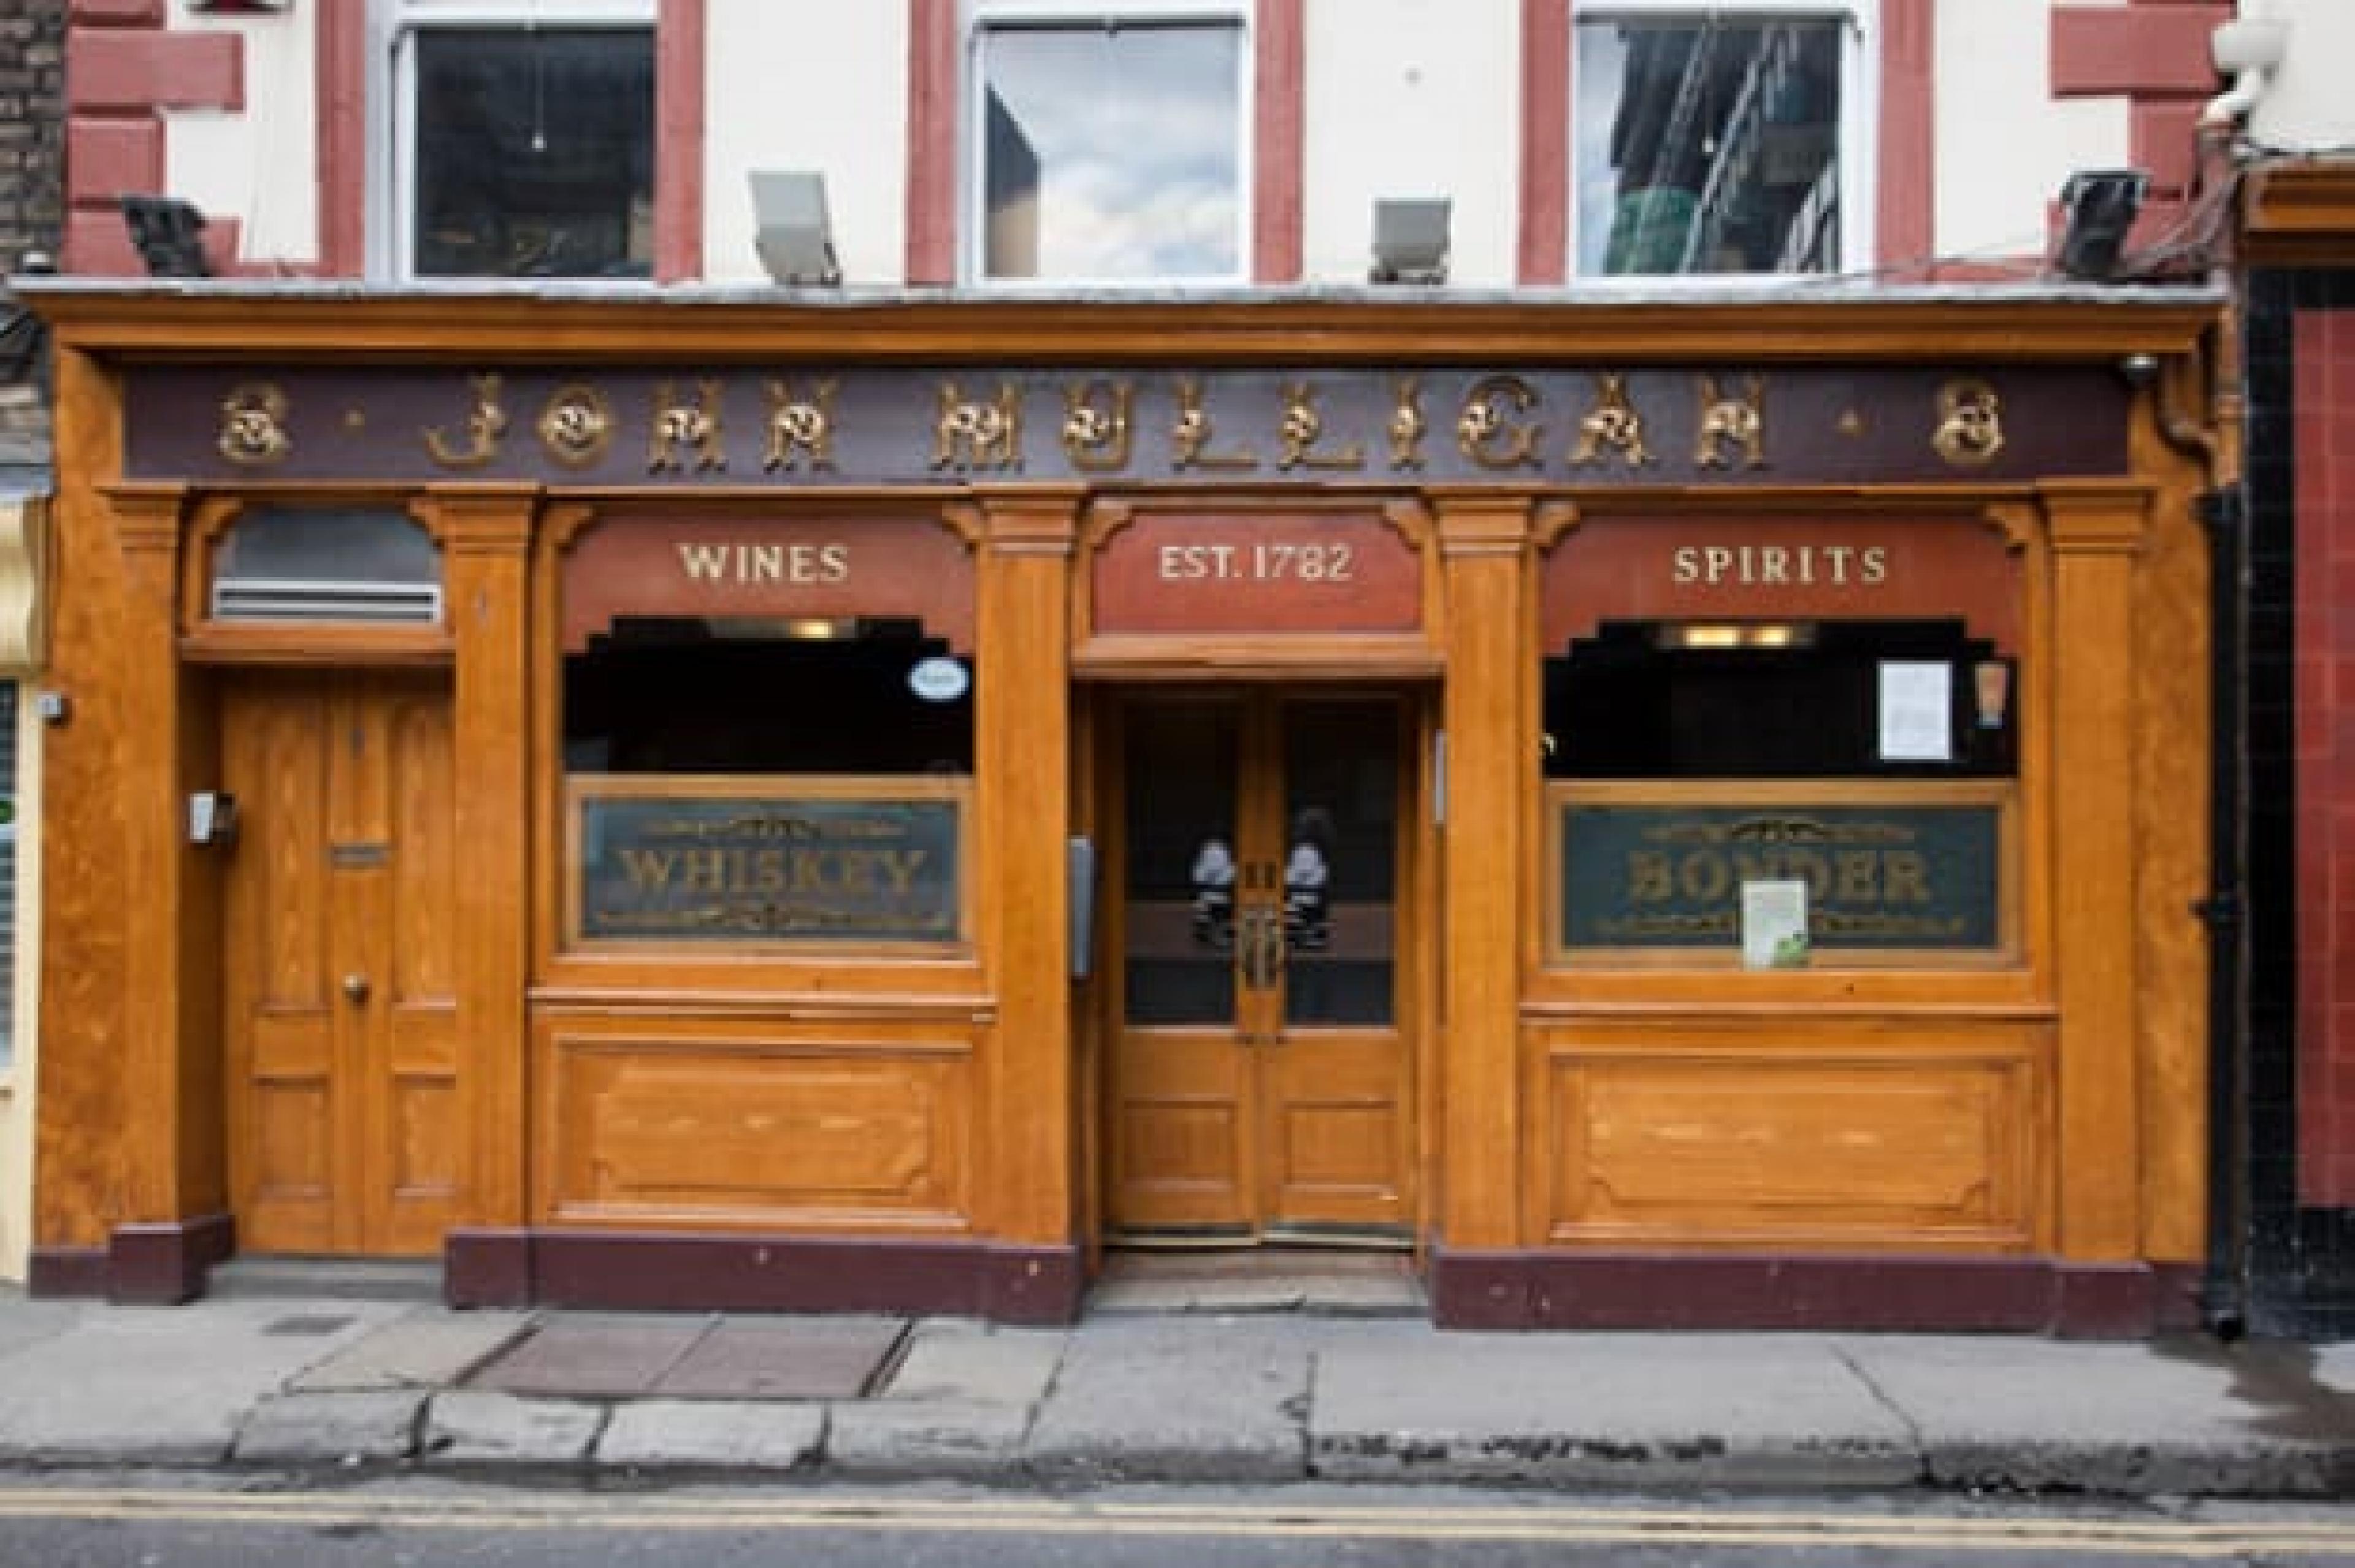 Mulligan's Dublin classic irish pub storefront